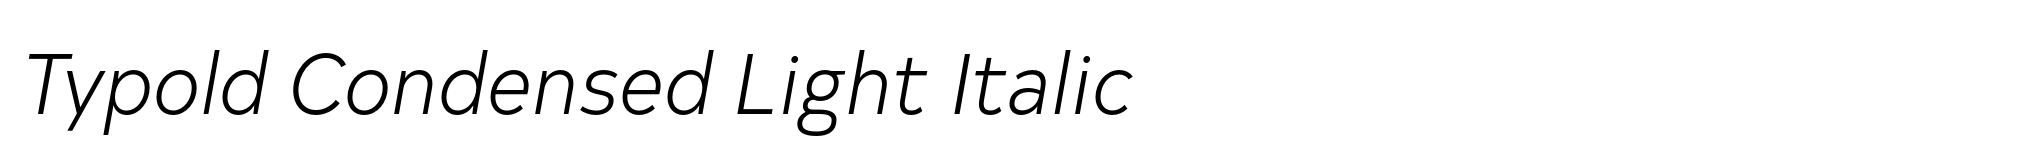 Typold Condensed Light Italic image